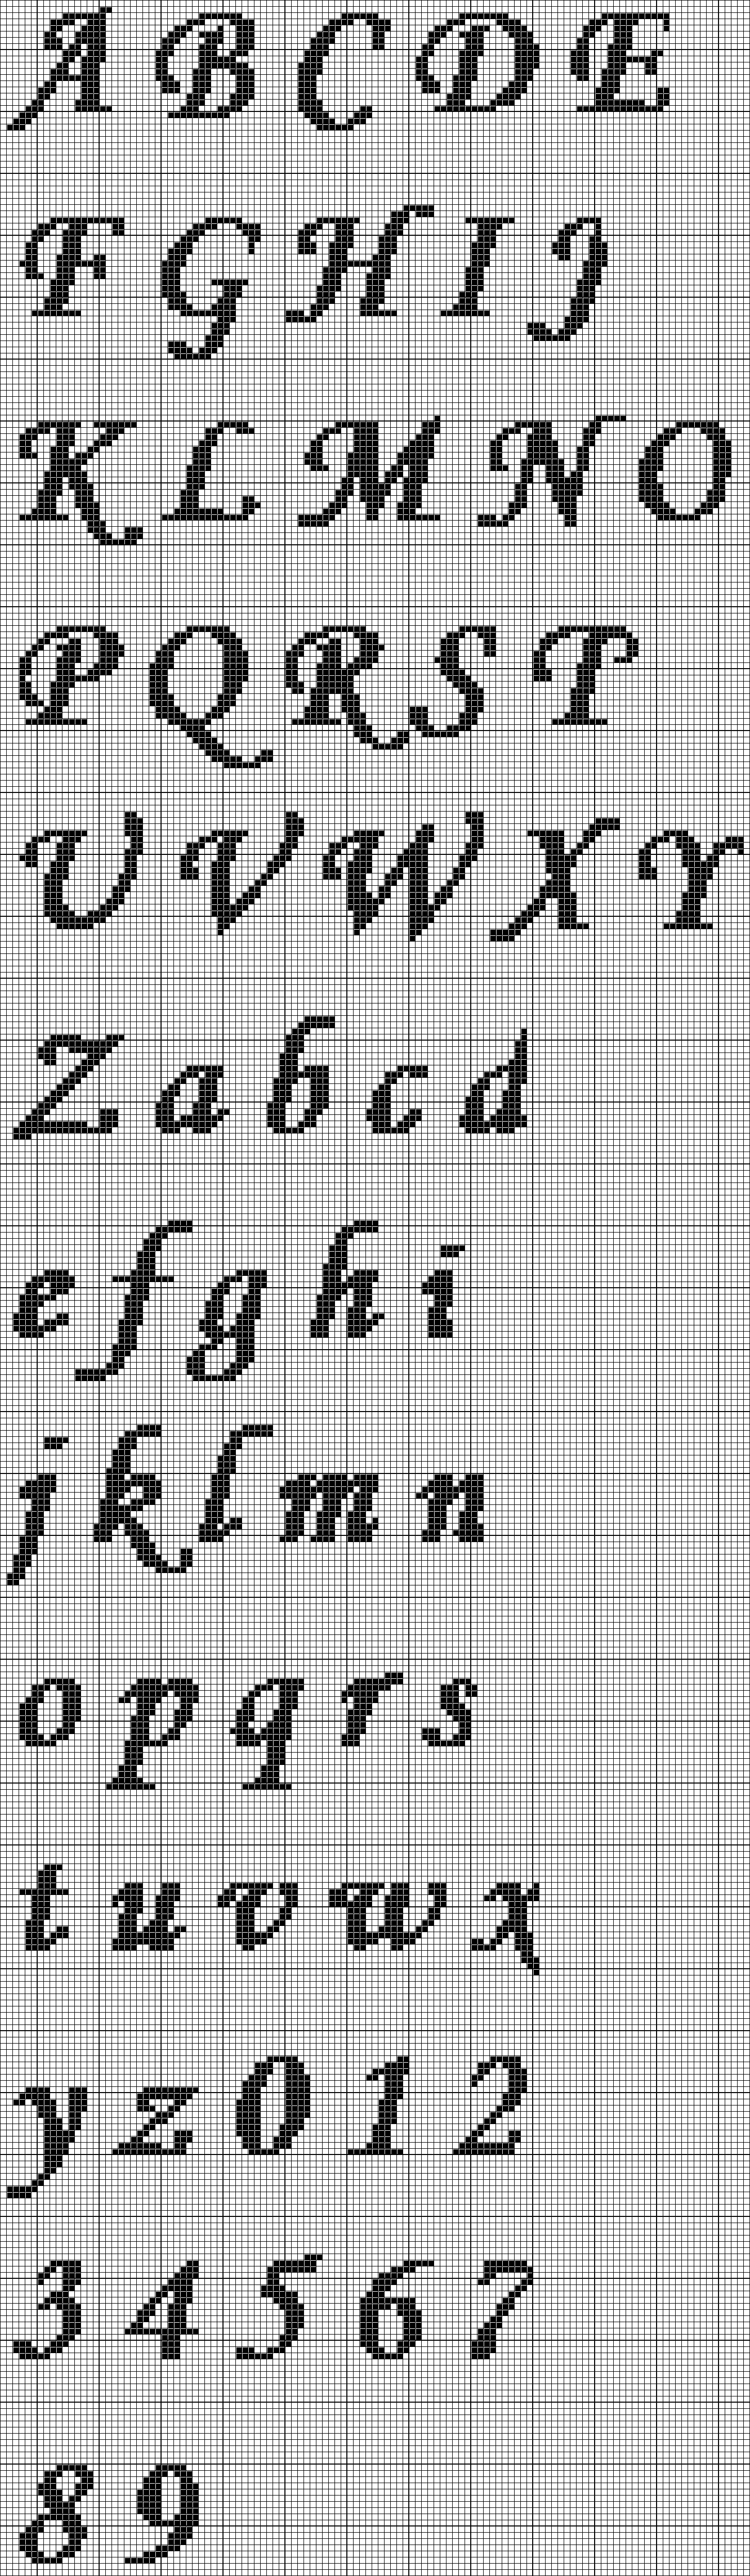 free-cross-stitch-patterns-alphabet